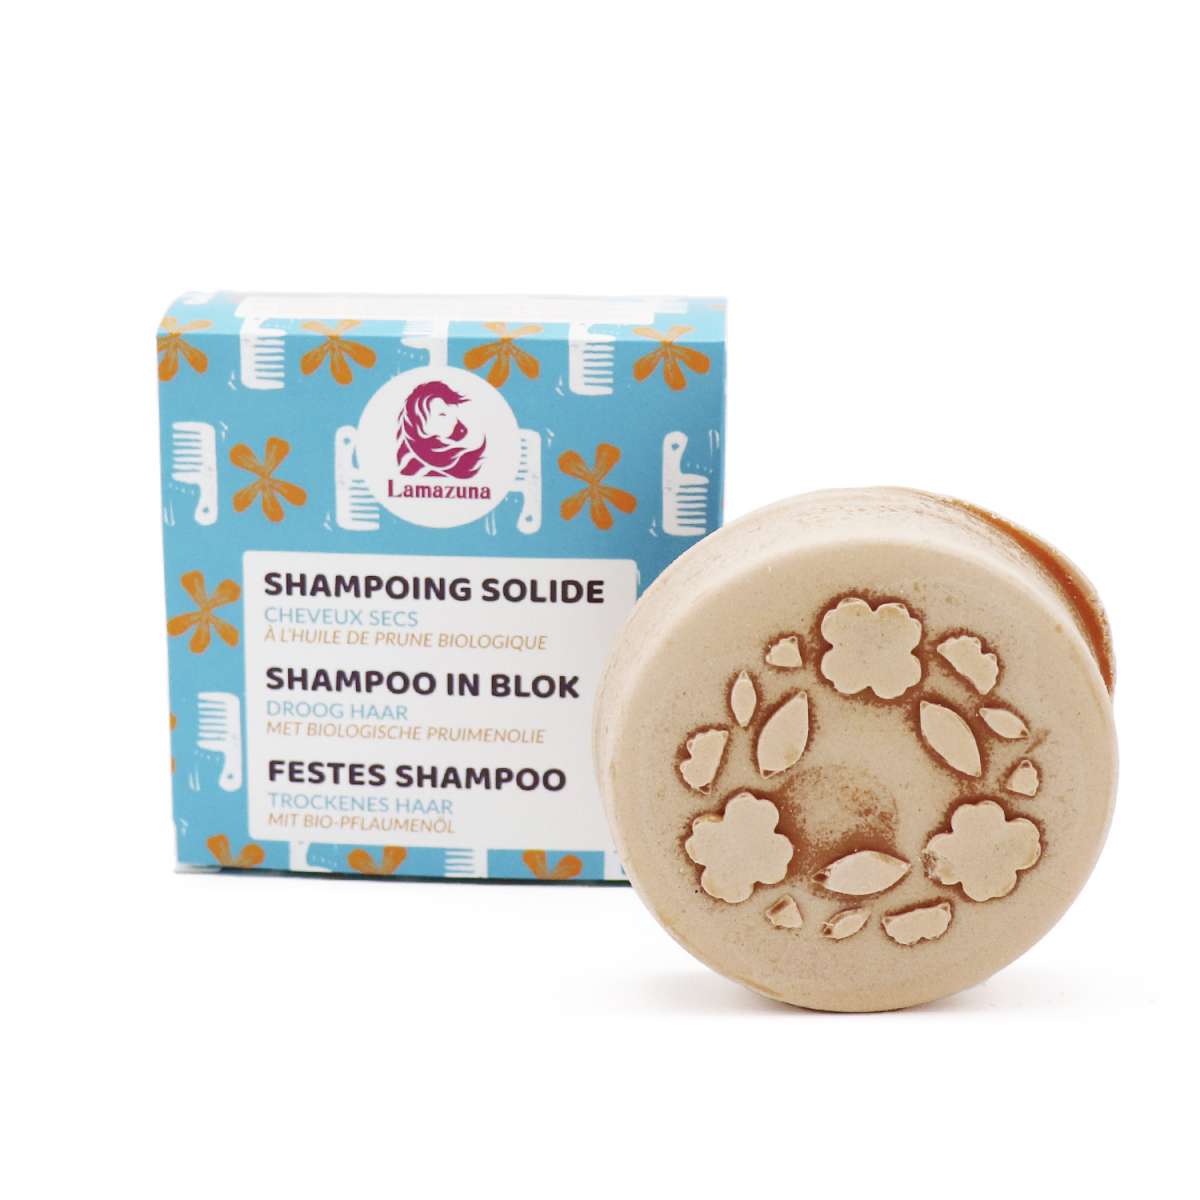 Lamazuna - Festes Shampoo Bio-Pflaumenöl (trockenes Haar) 70ml